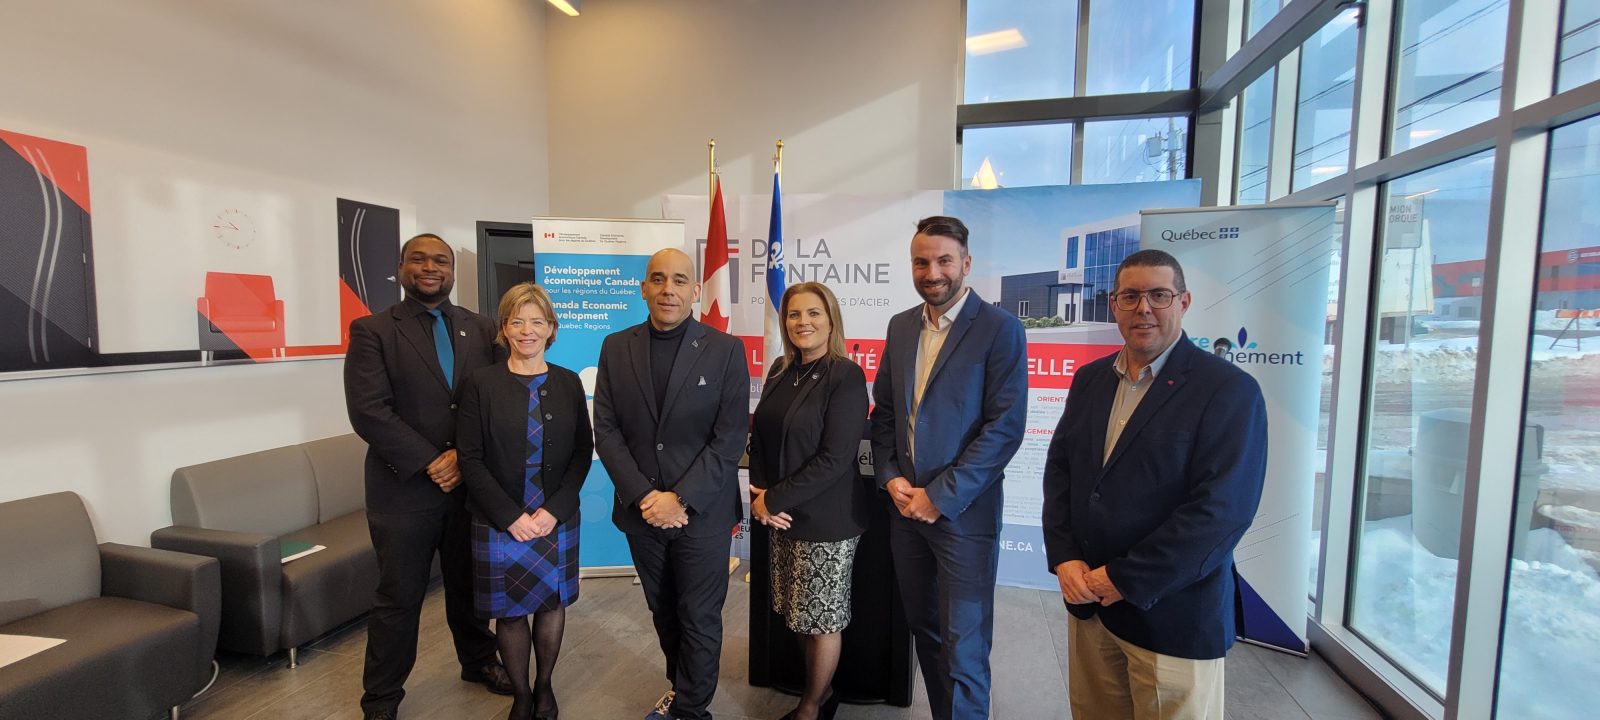 Federal & Provincial governments announce $4m for De La Fontaine expansion project